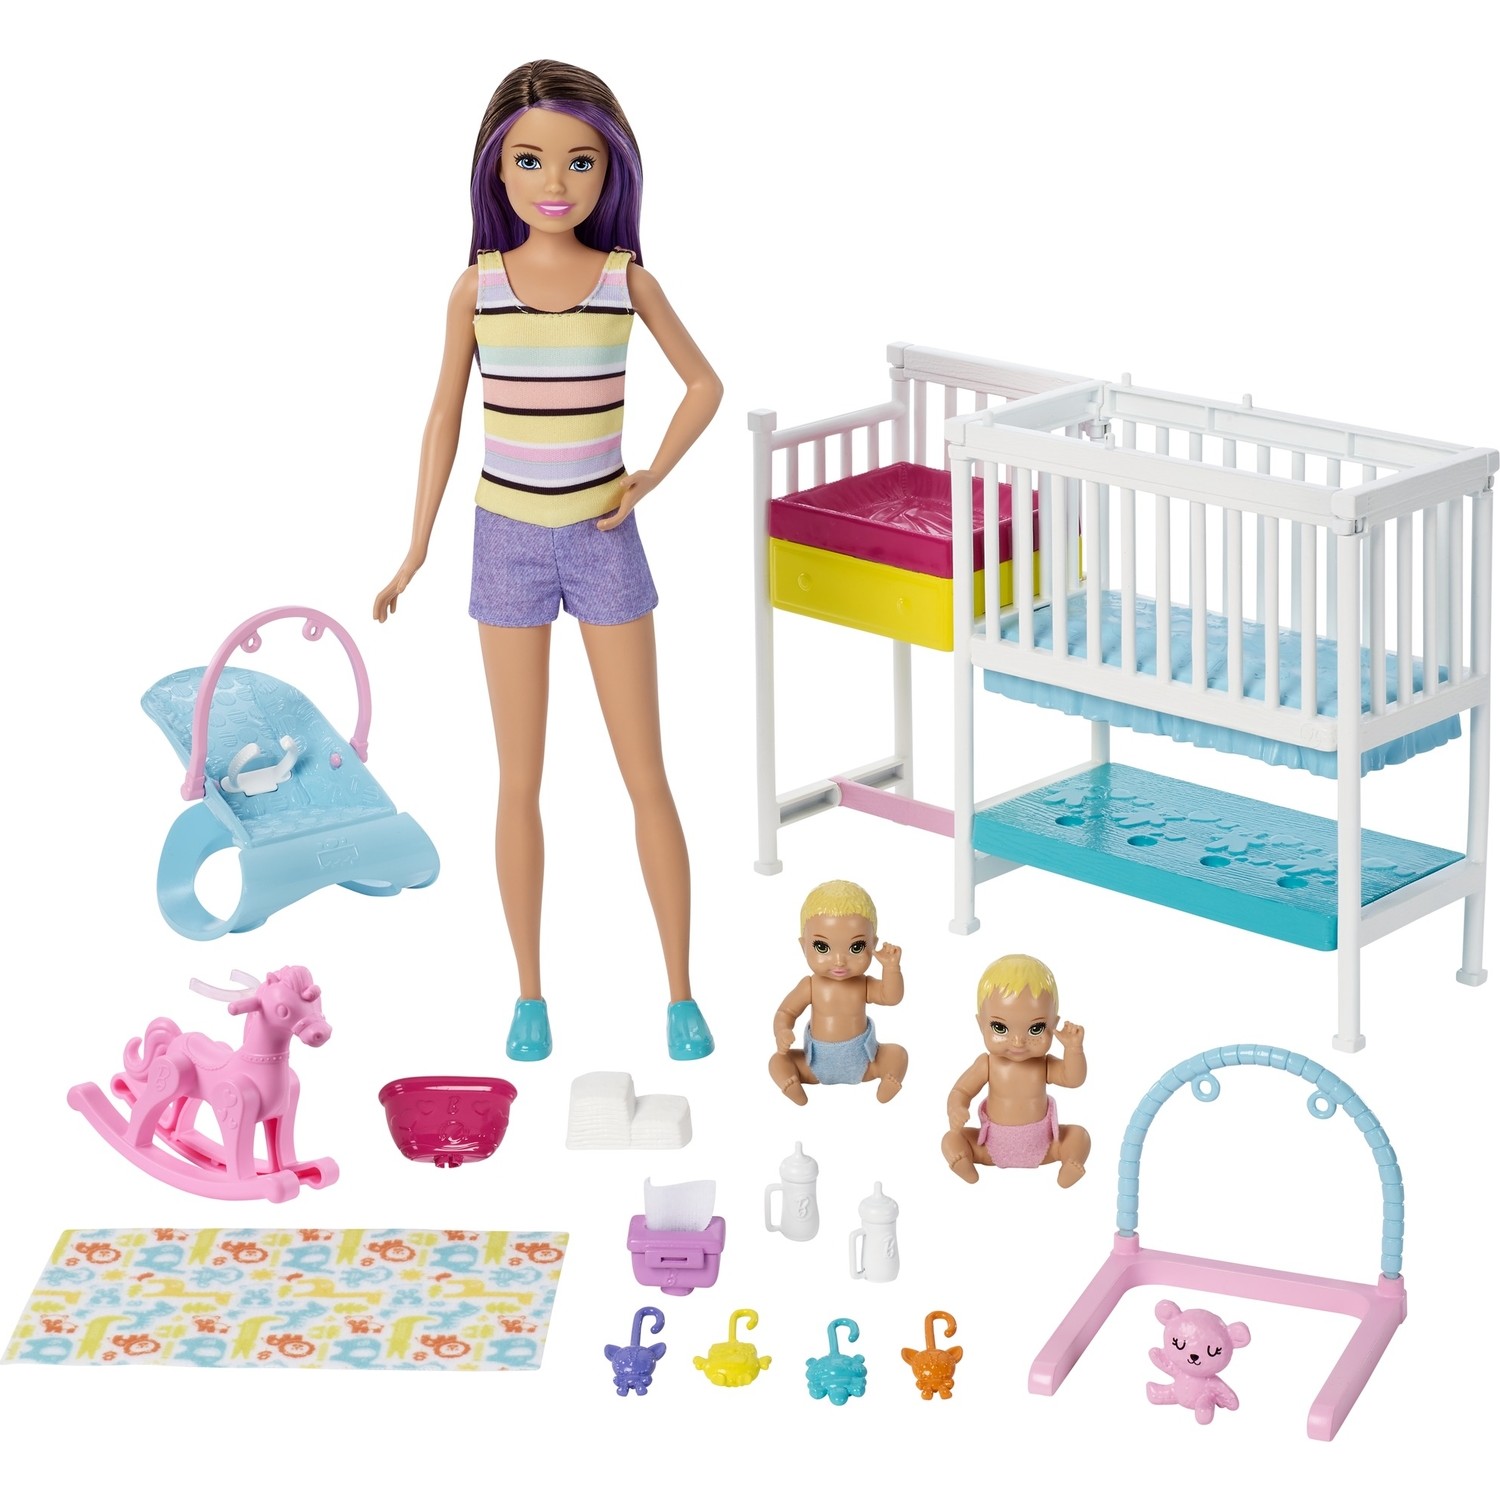 Игровой набор Barbie Skipper Babysitters игровой набор энчантималс ночевка в саванне enchantimals savannah sleepover playset with griselda giraffe doll